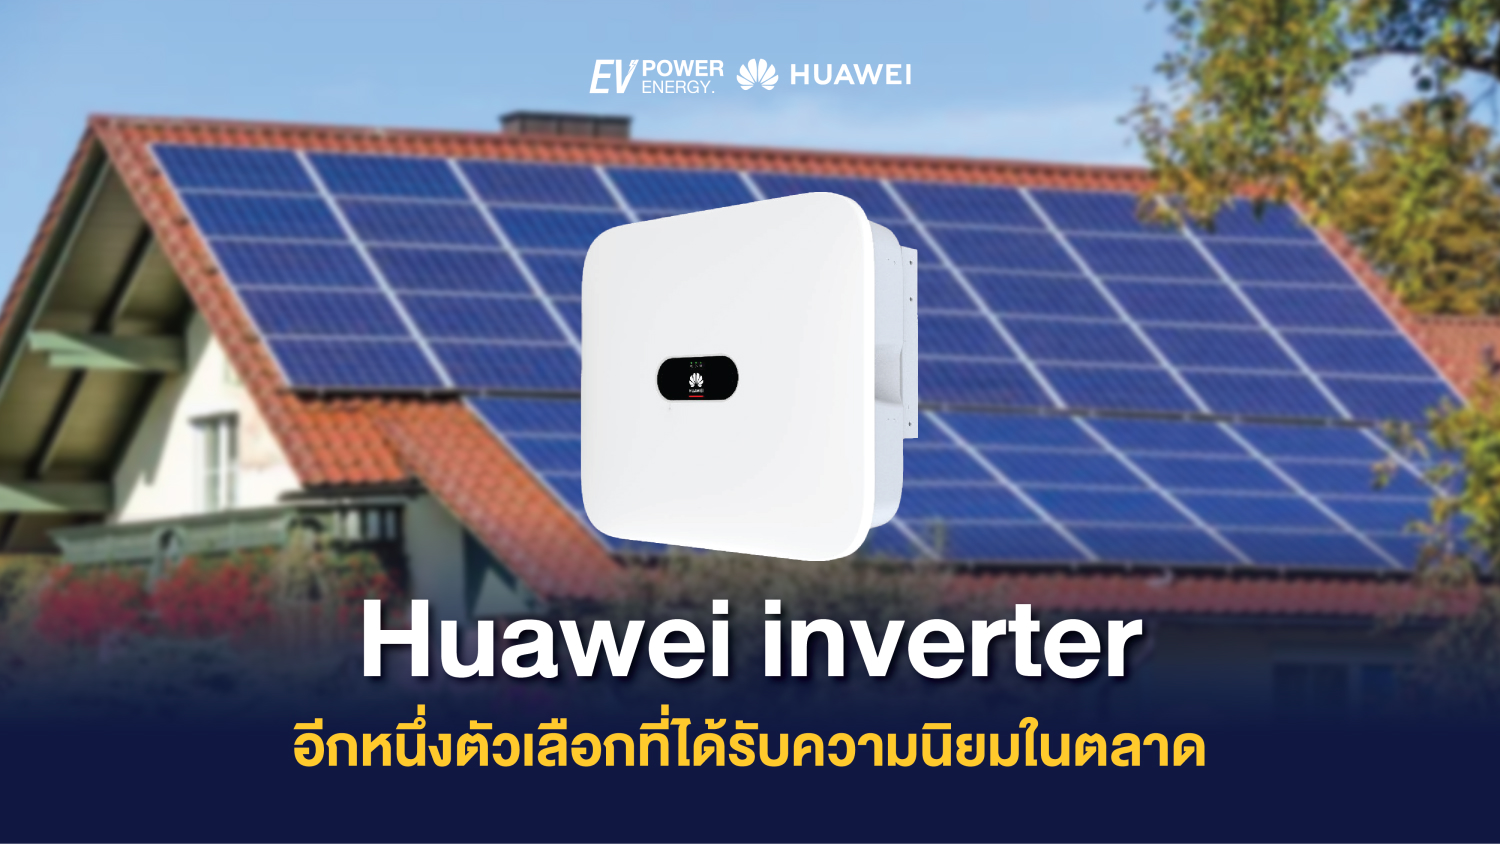 Huawei inverter อีกหนึ่งตัวเลือกที่ได้รับความนิยมในตลาด 1